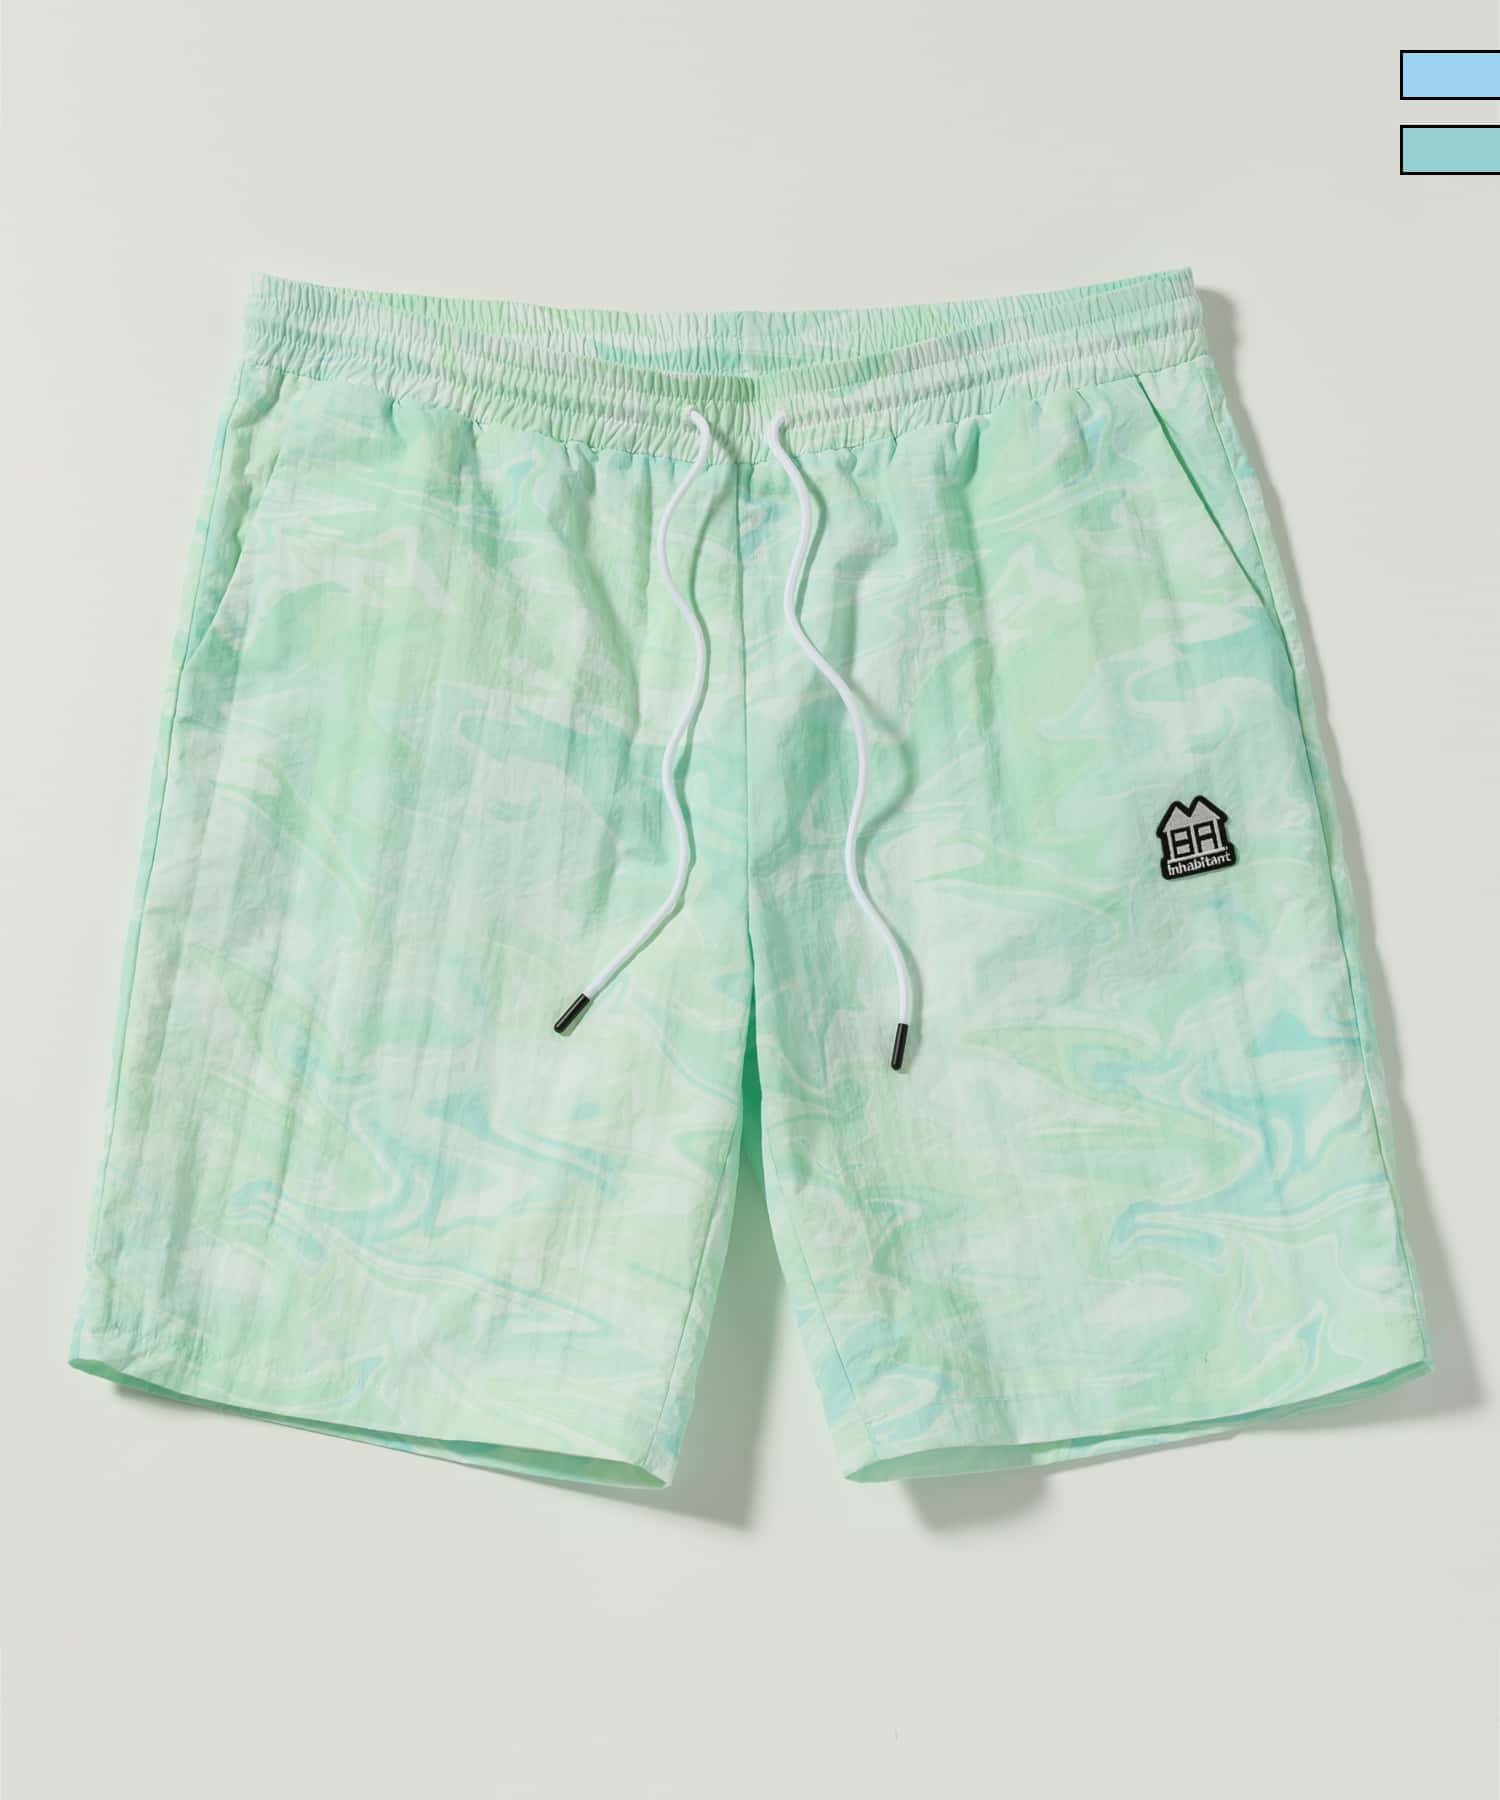 【MENS】Boatmans Dry Shorts